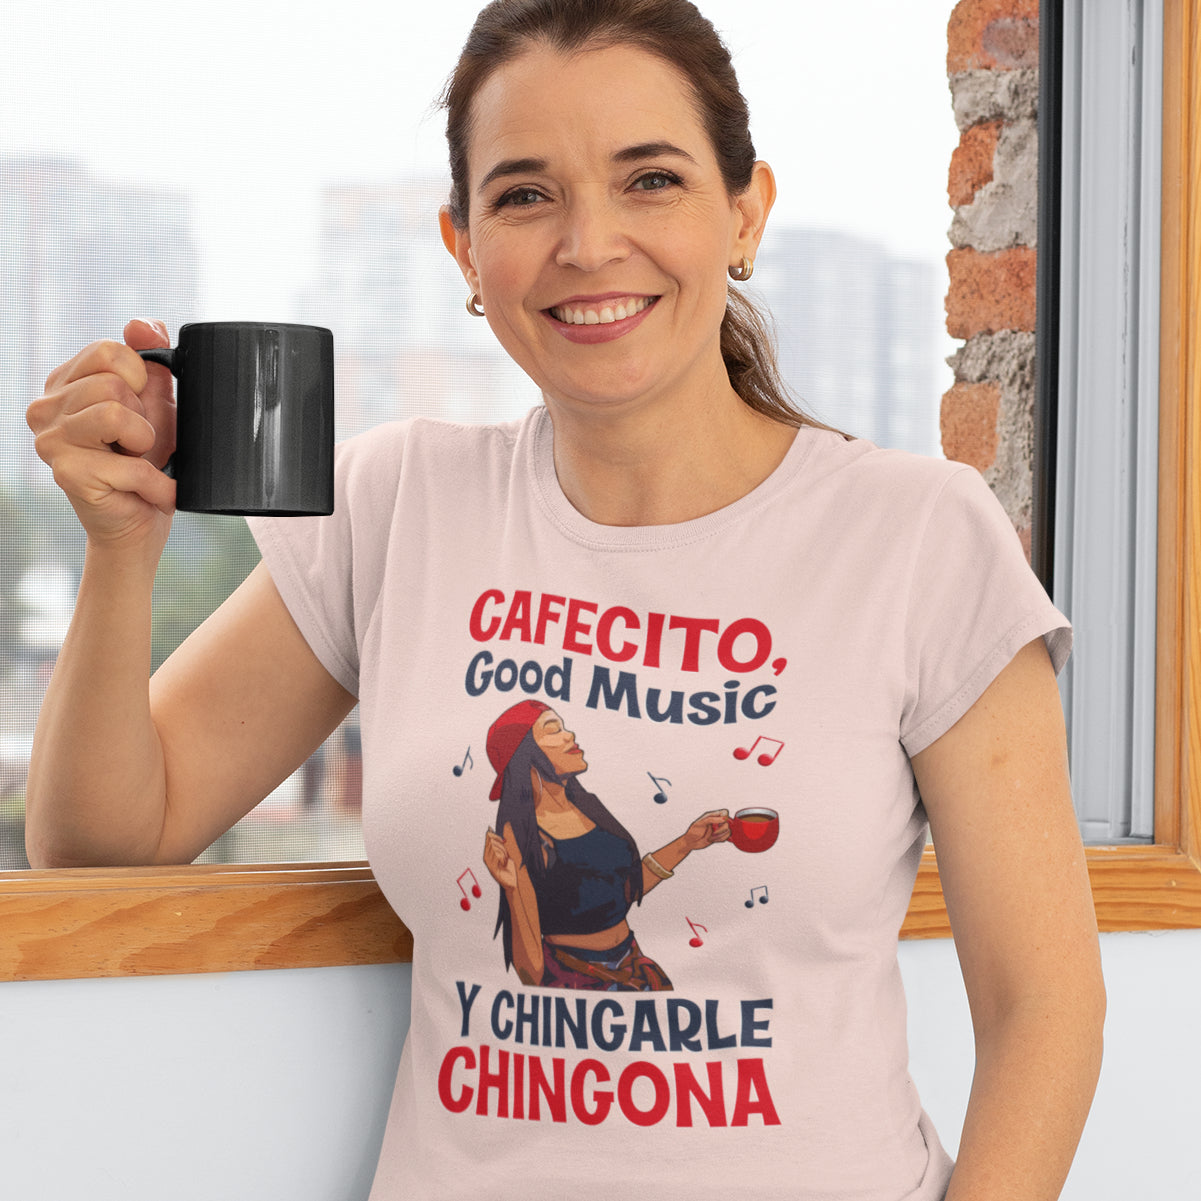 Cafecito, Good Music Y Chingarle Chingona T-Shirt